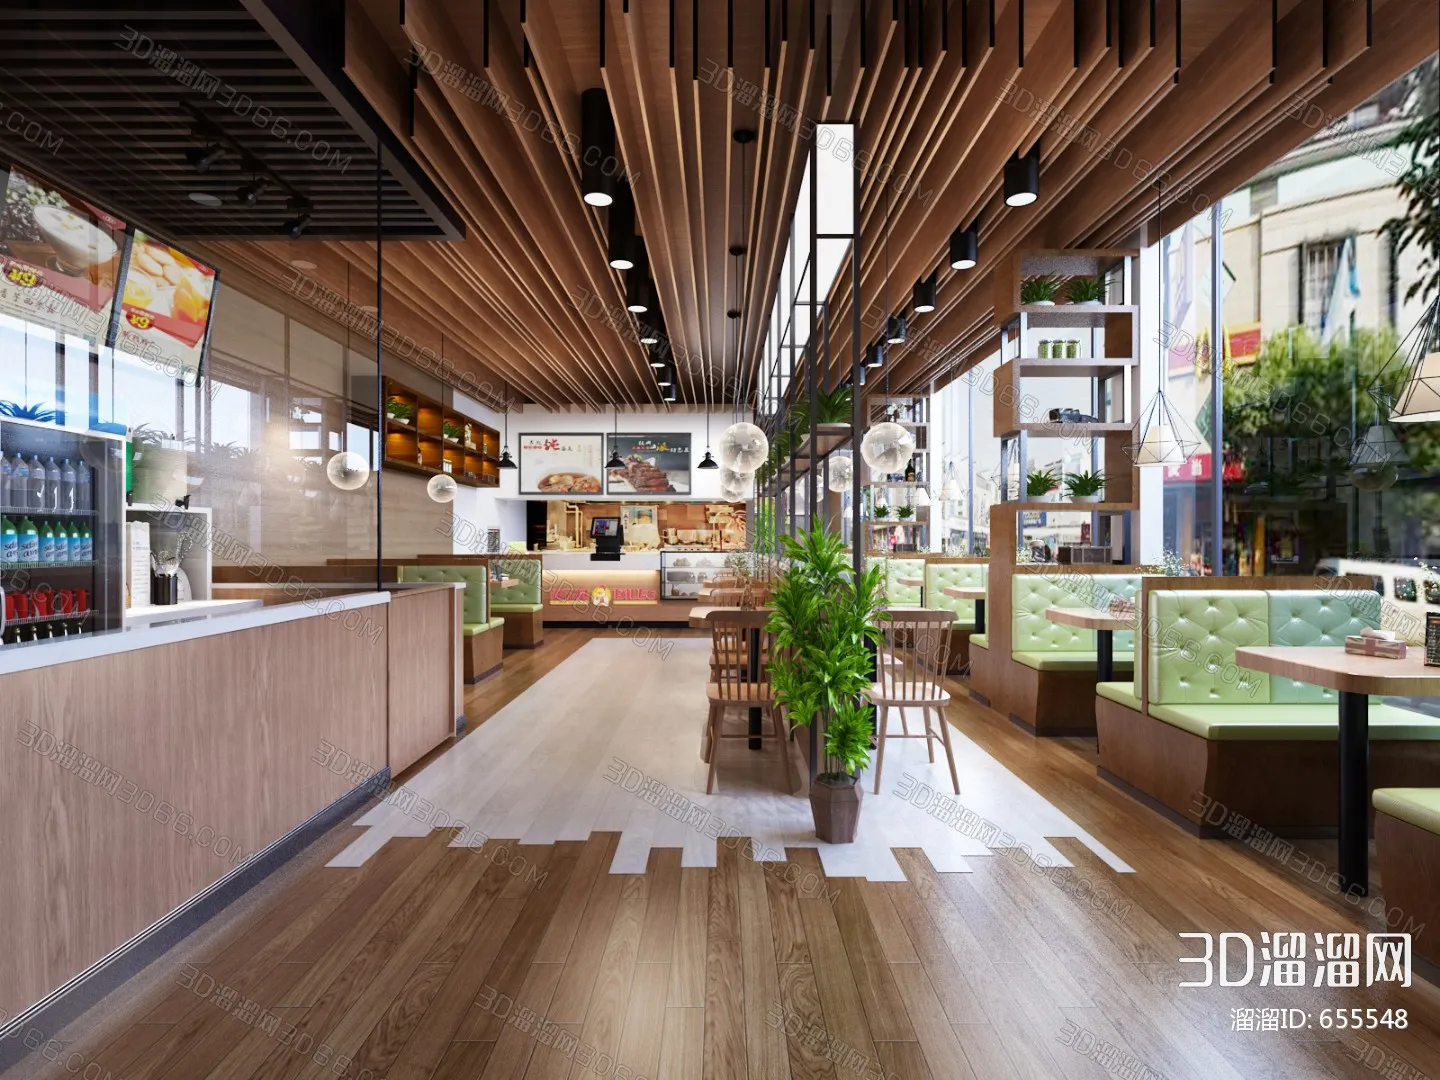 Coffee Shop 3D Scenes – 0413